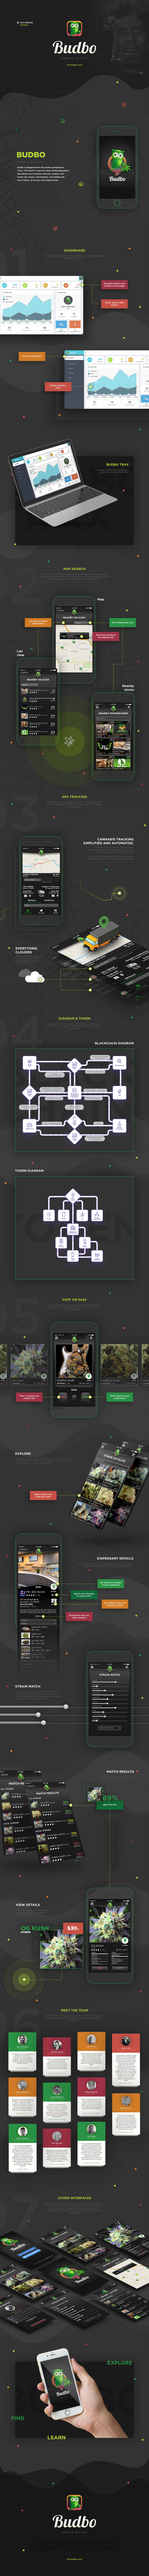 ui design Interface ux UI app design showcase graphic design  smoke dark User Inerface